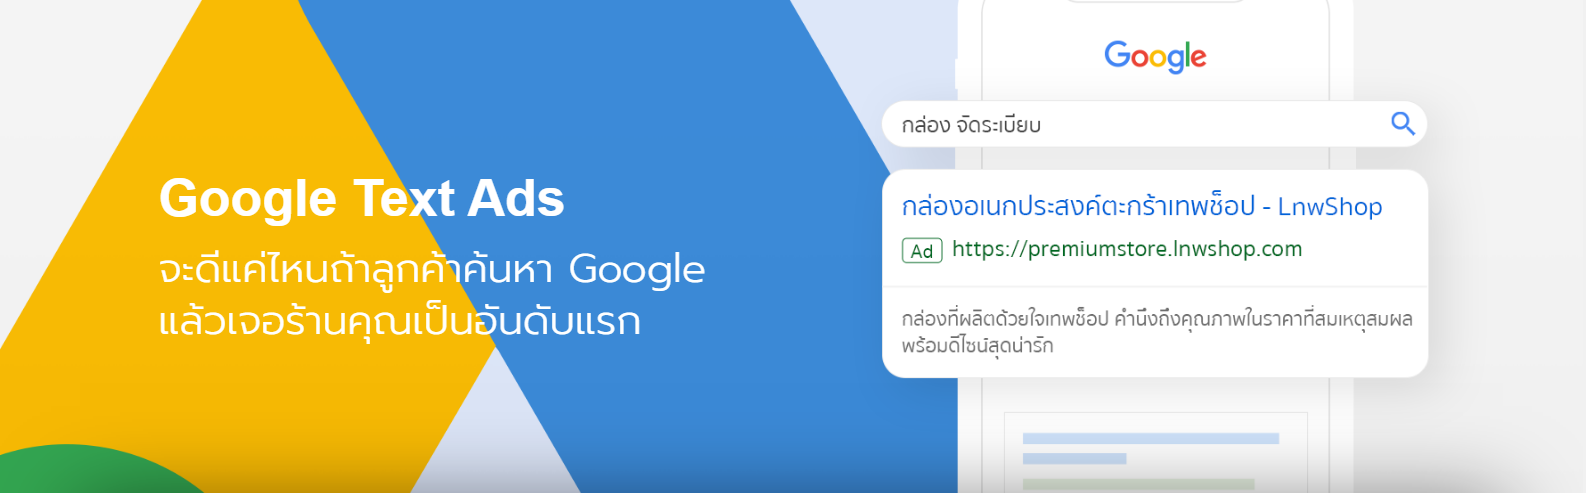 Google Text Ads - Google Marketing